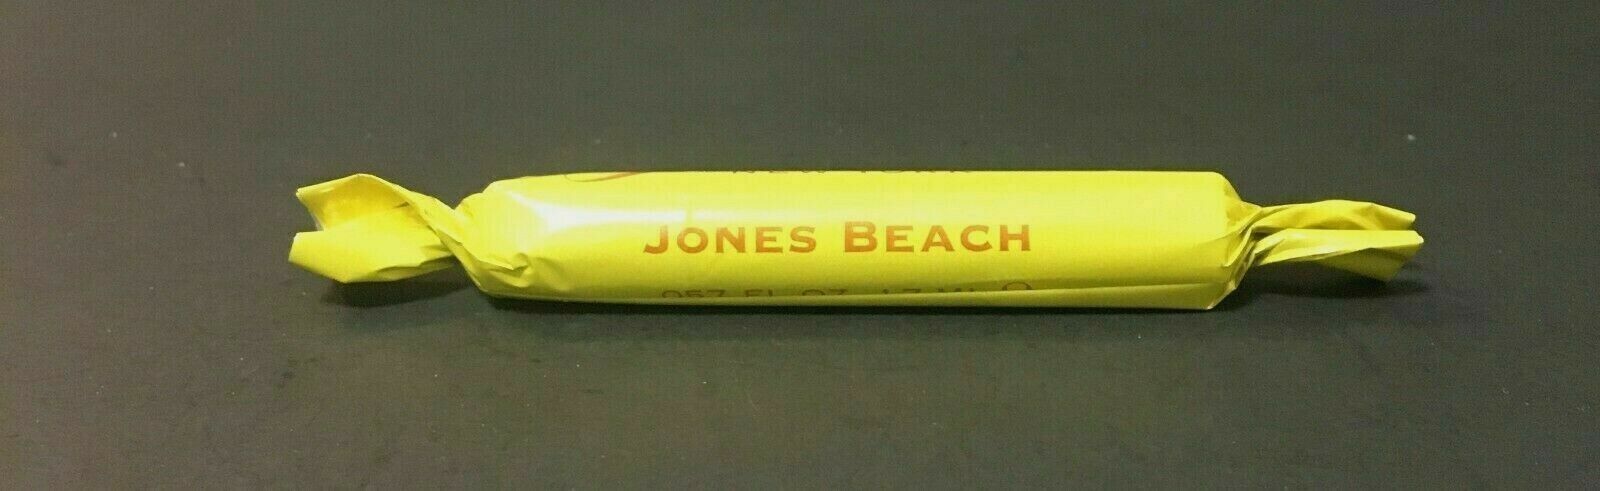 Bond No.9 Jones Beach 1.7 ML 0.057 fl. uns. officiellt parfymprov